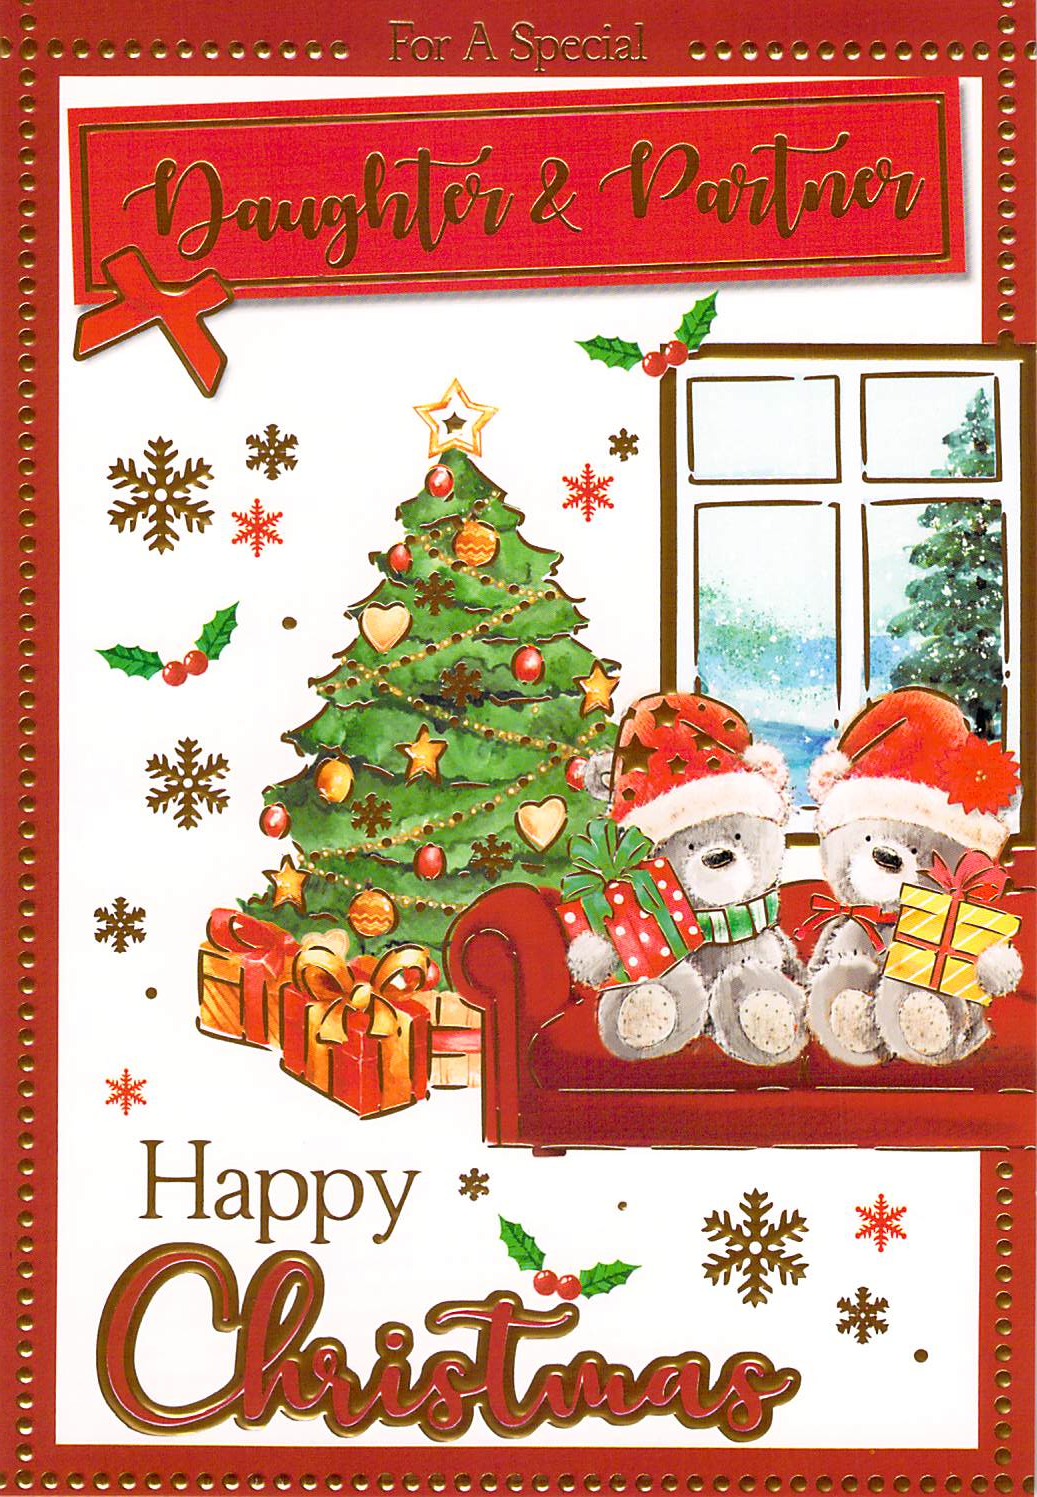 Christmas - Daughter & partner -  Greeting Card